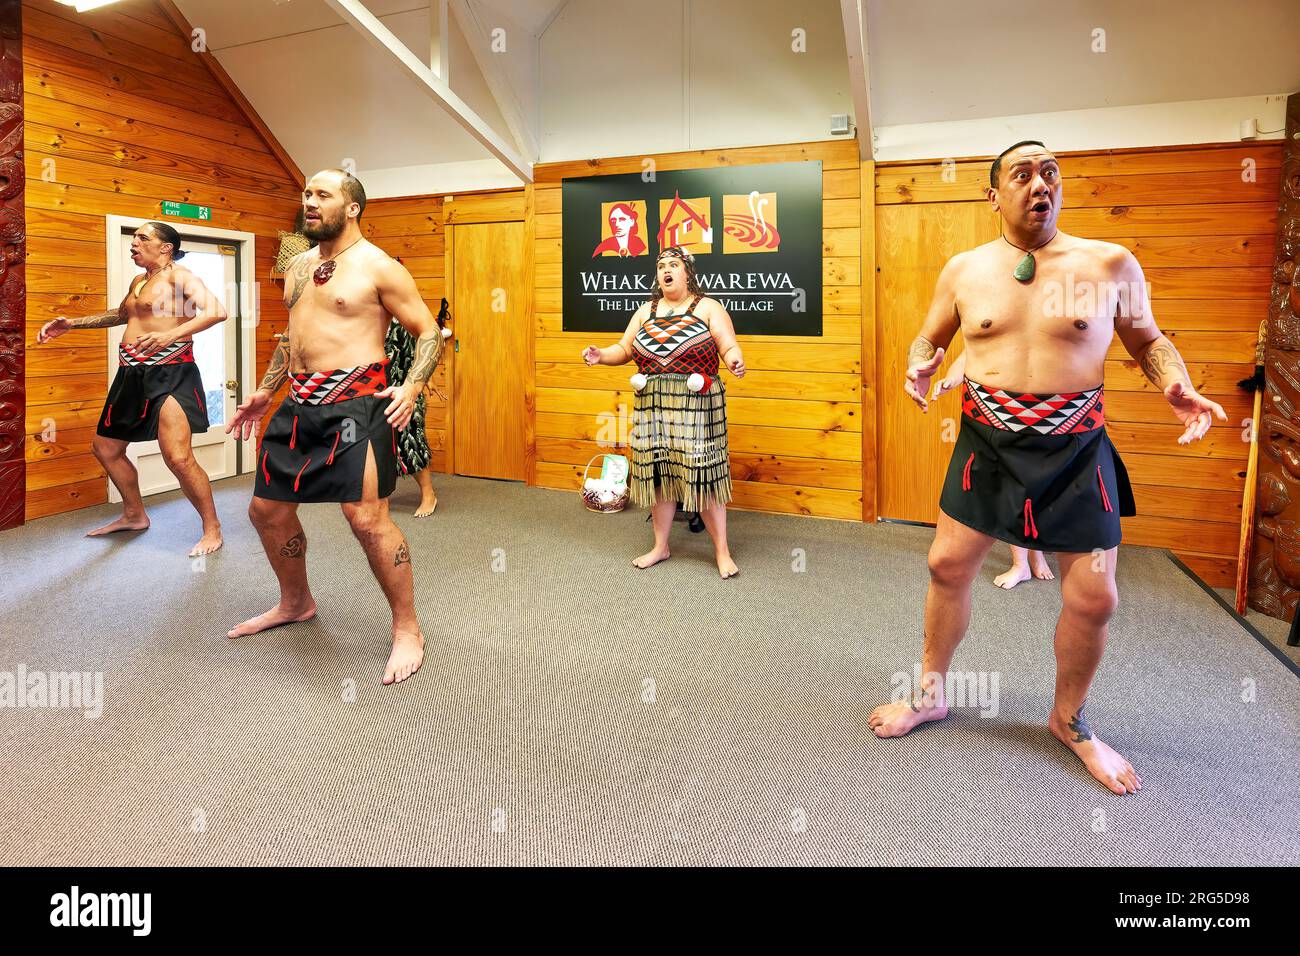 Rotorua. Neuseeland. Haka traditioneller Tanz im Whakarewarewa Living Maori Village Stockfoto